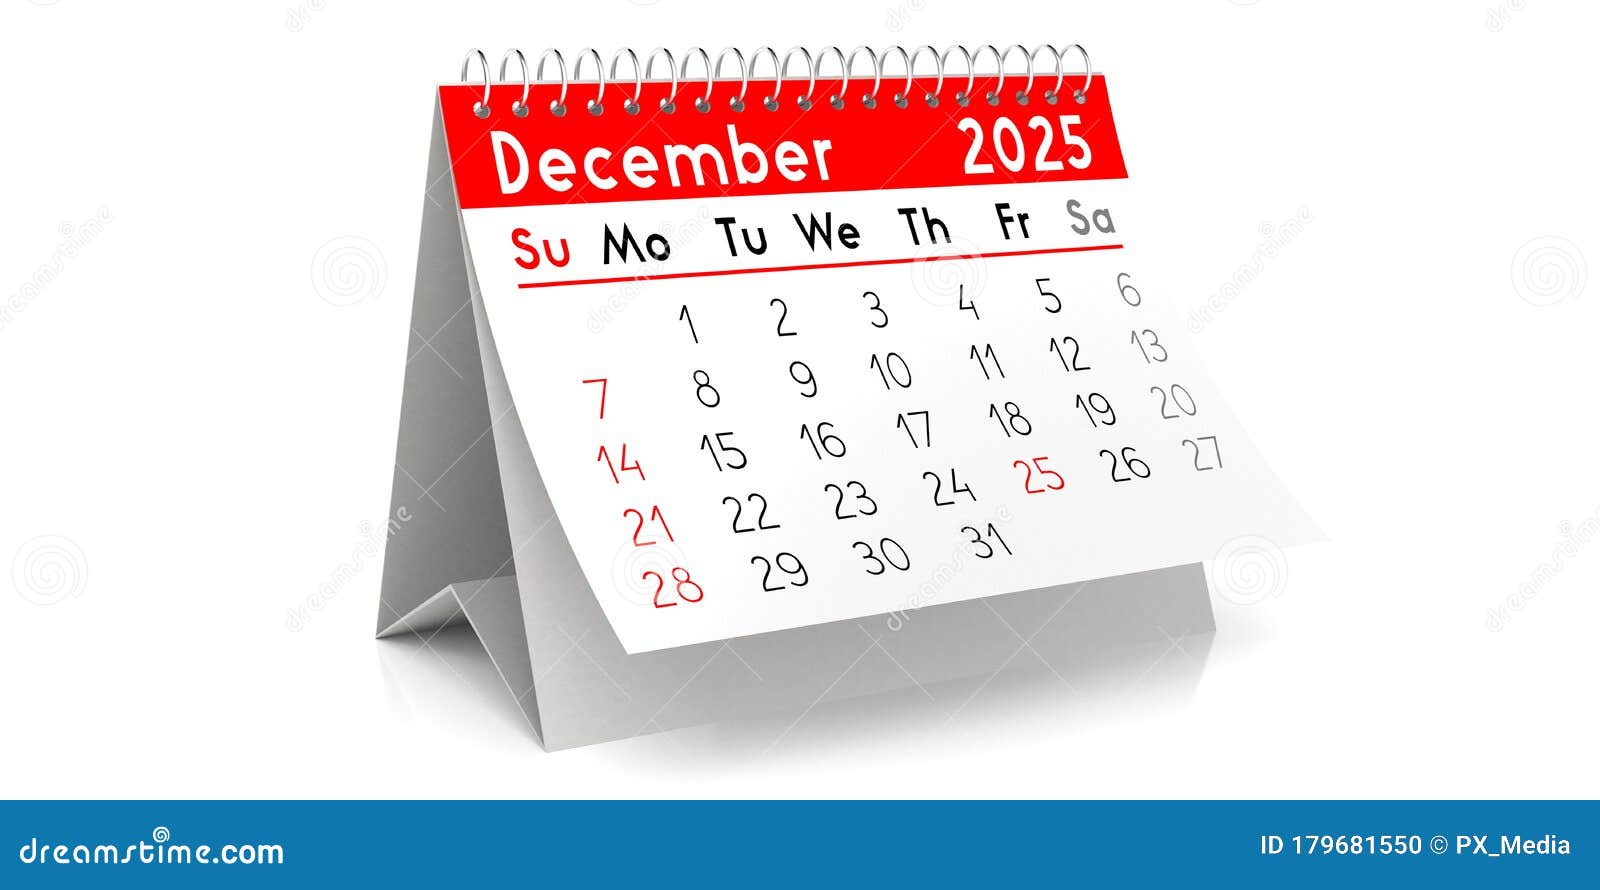 december-2025-table-calendar-3d-illustration-stock-illustration